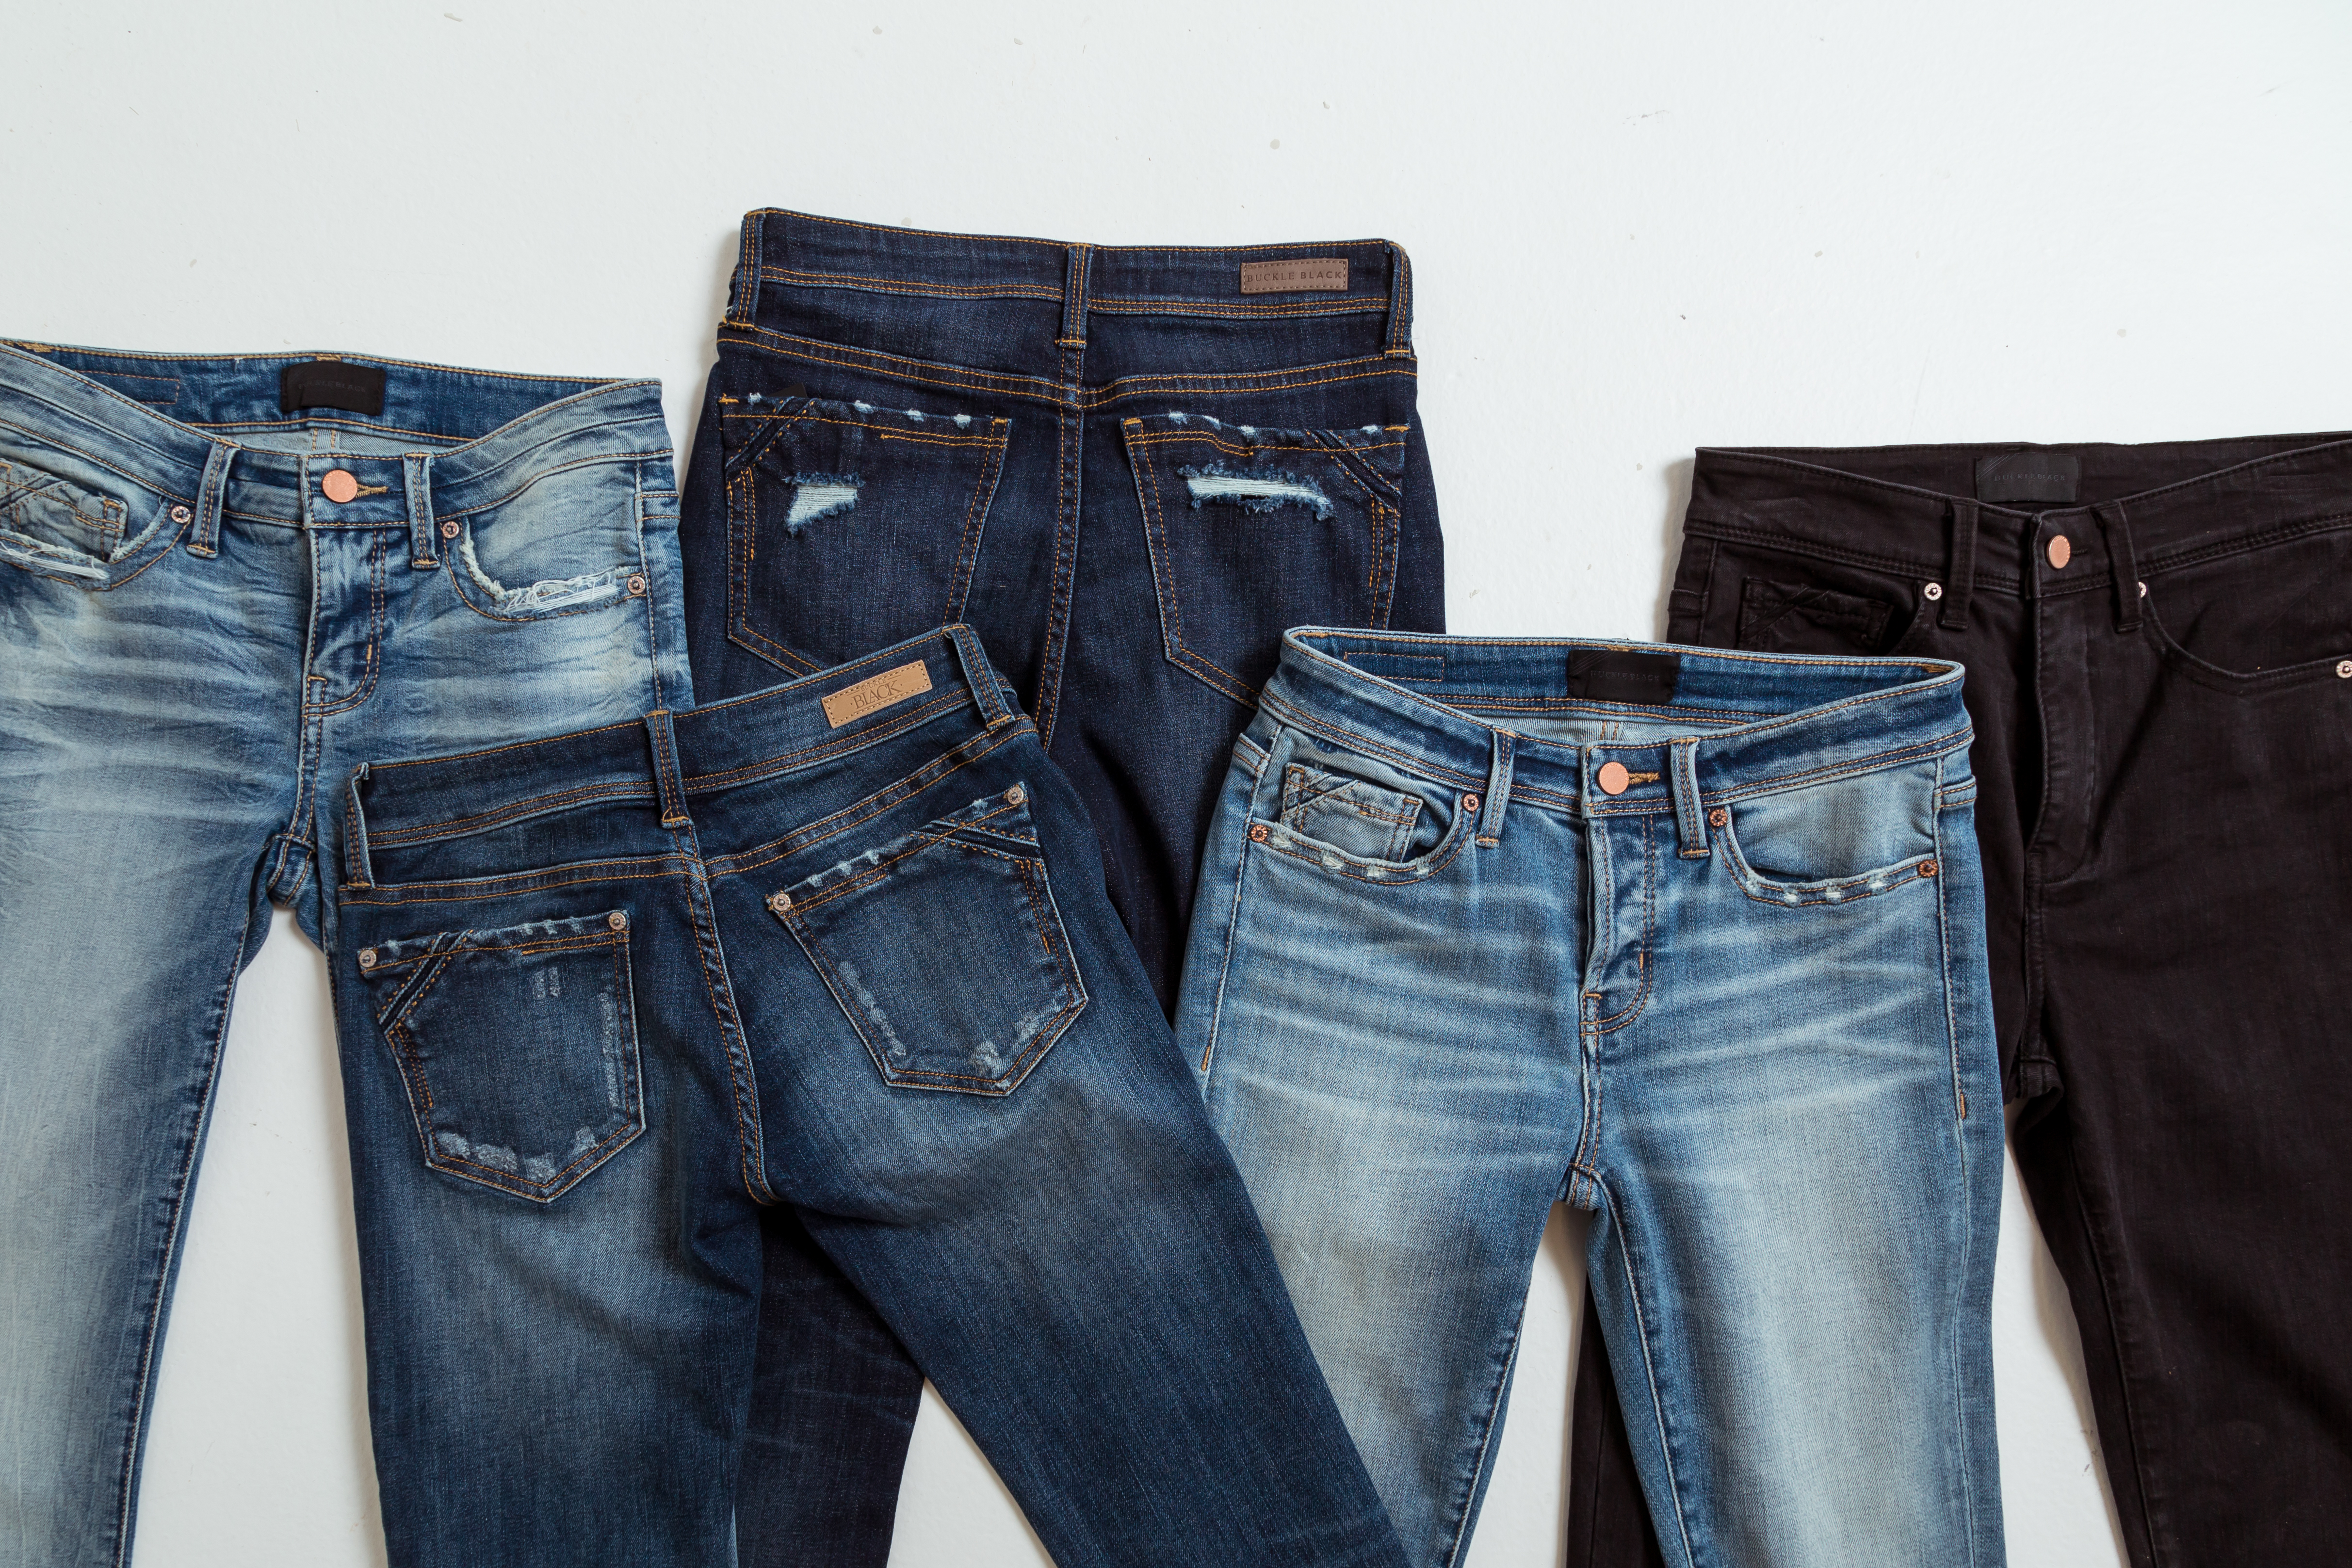 Bke Jeans Size Chart Clothing